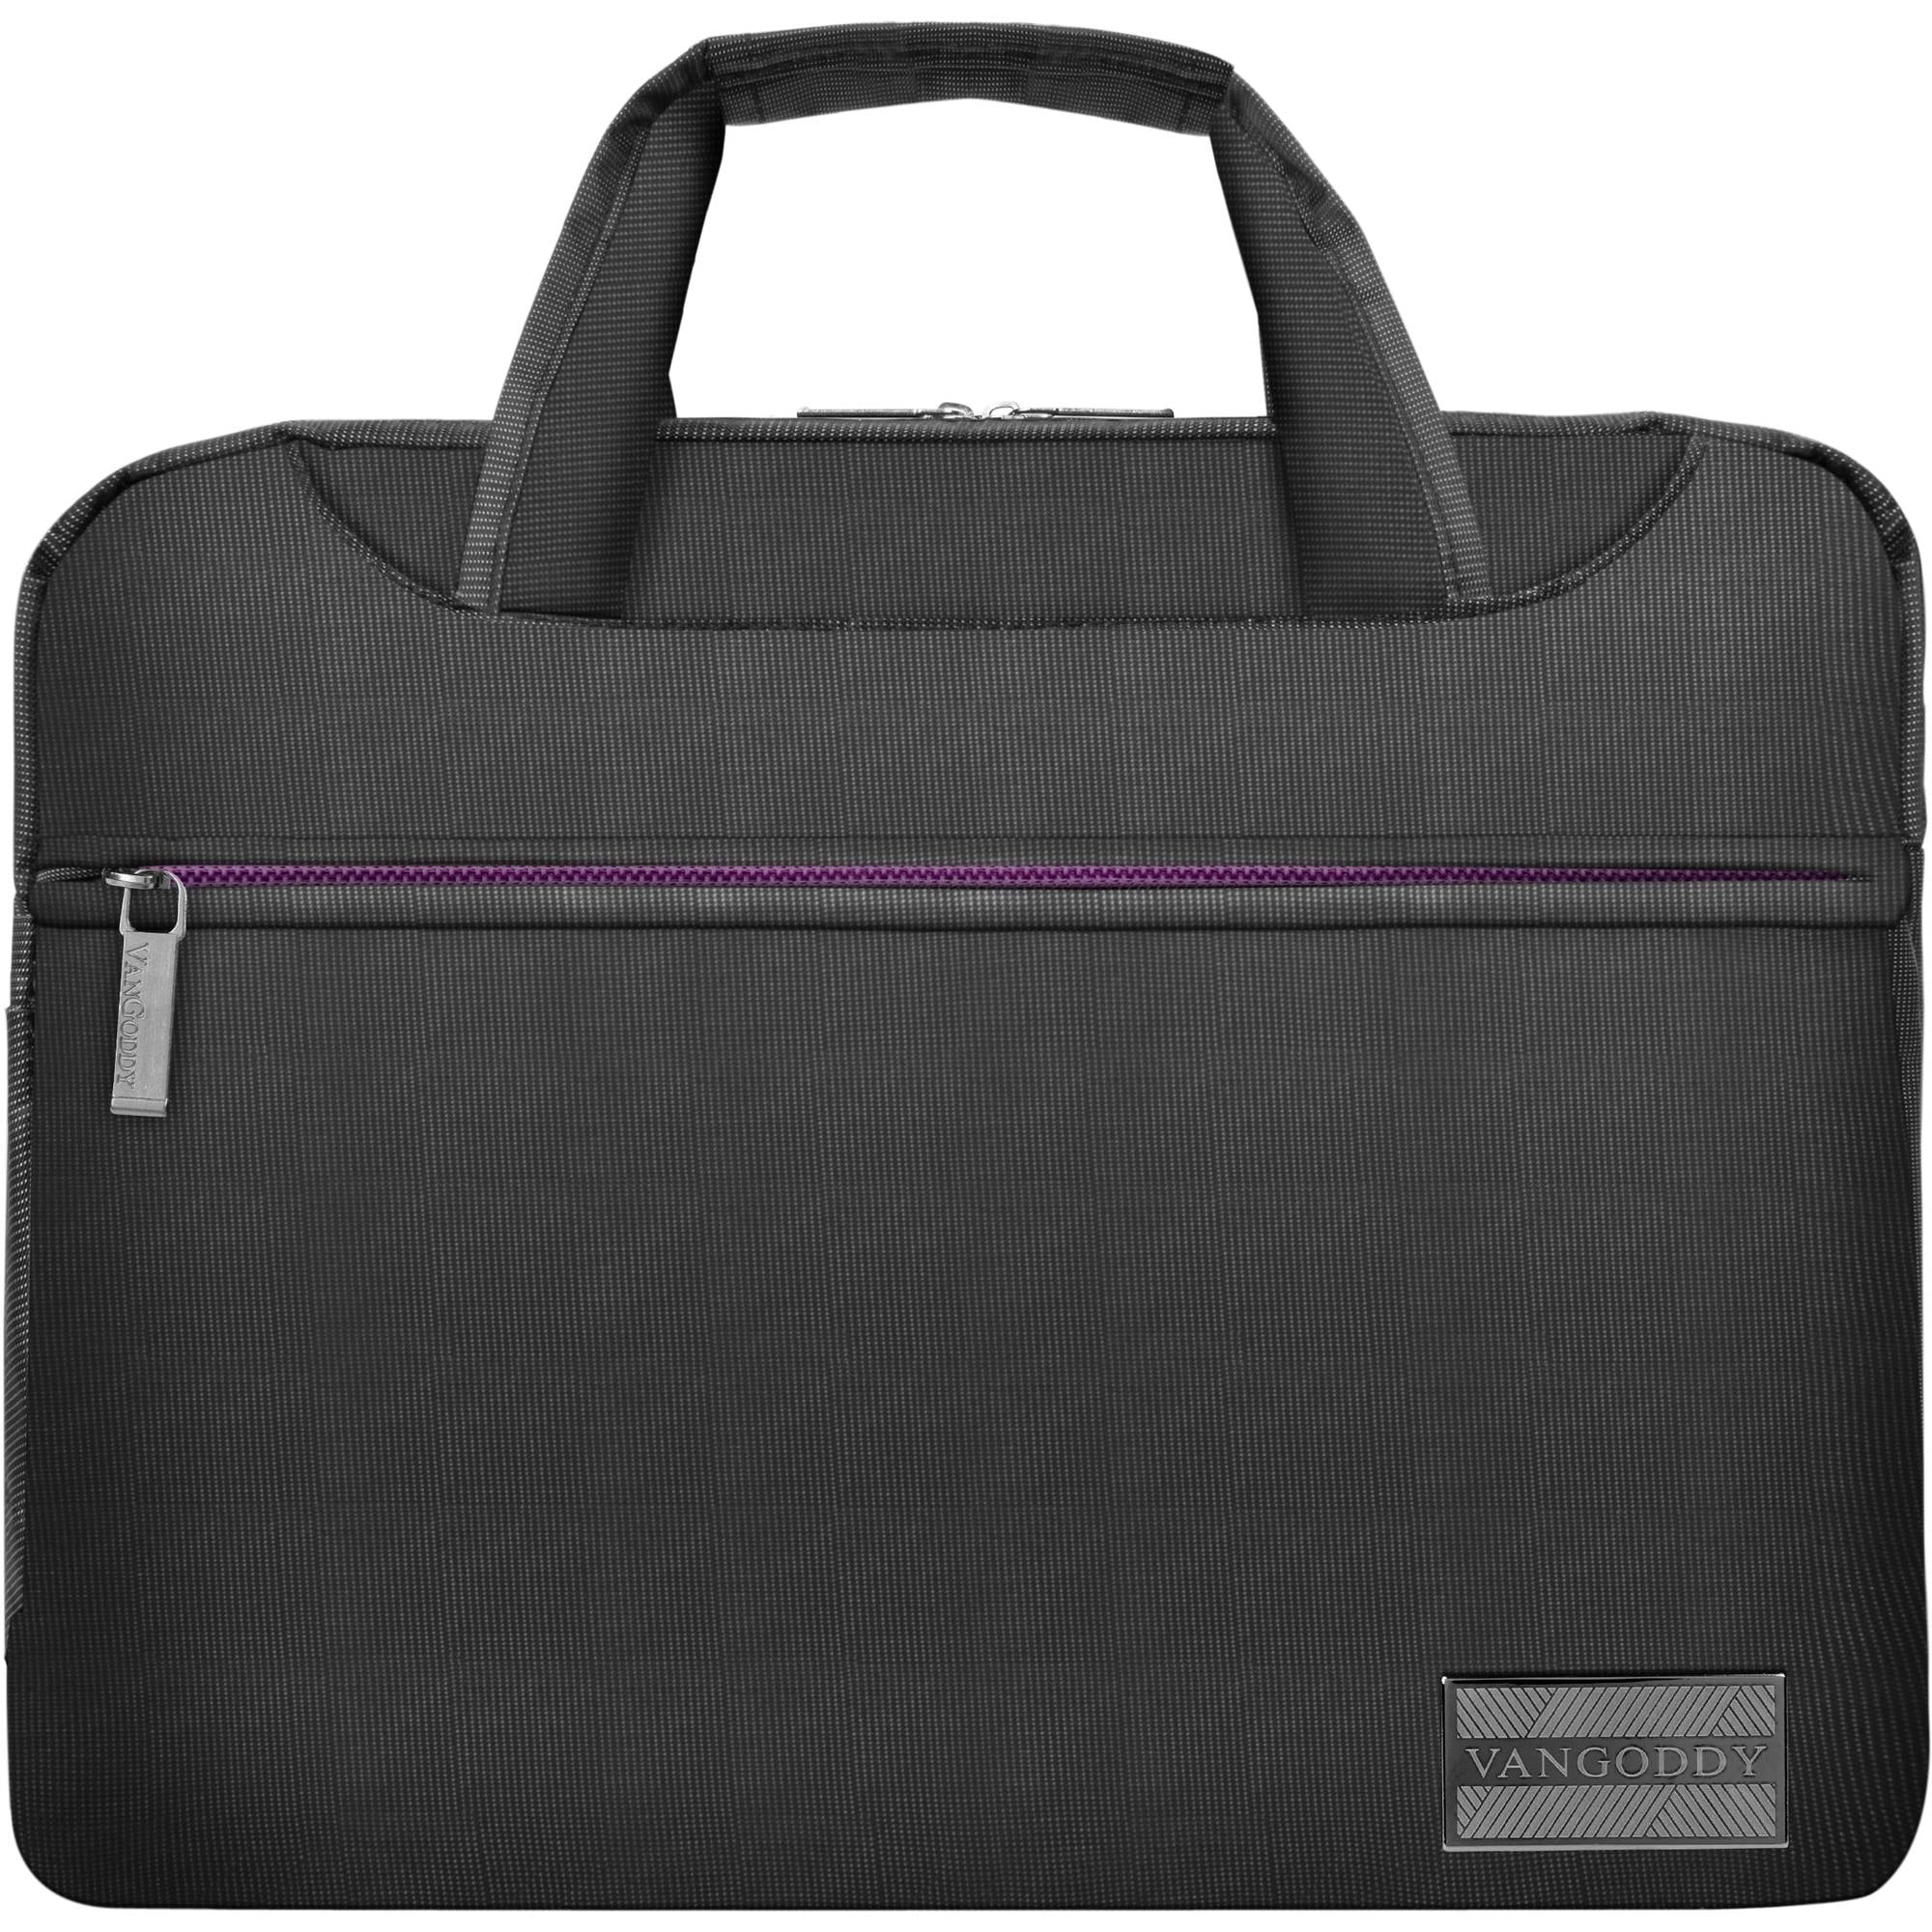 Yuotry Neoprene Laptop Sleeve Case Jeans Fabric Portable Laptop Bag Business Laptop Shoulder Messenger Bag Protective Bag 15.6 Inch